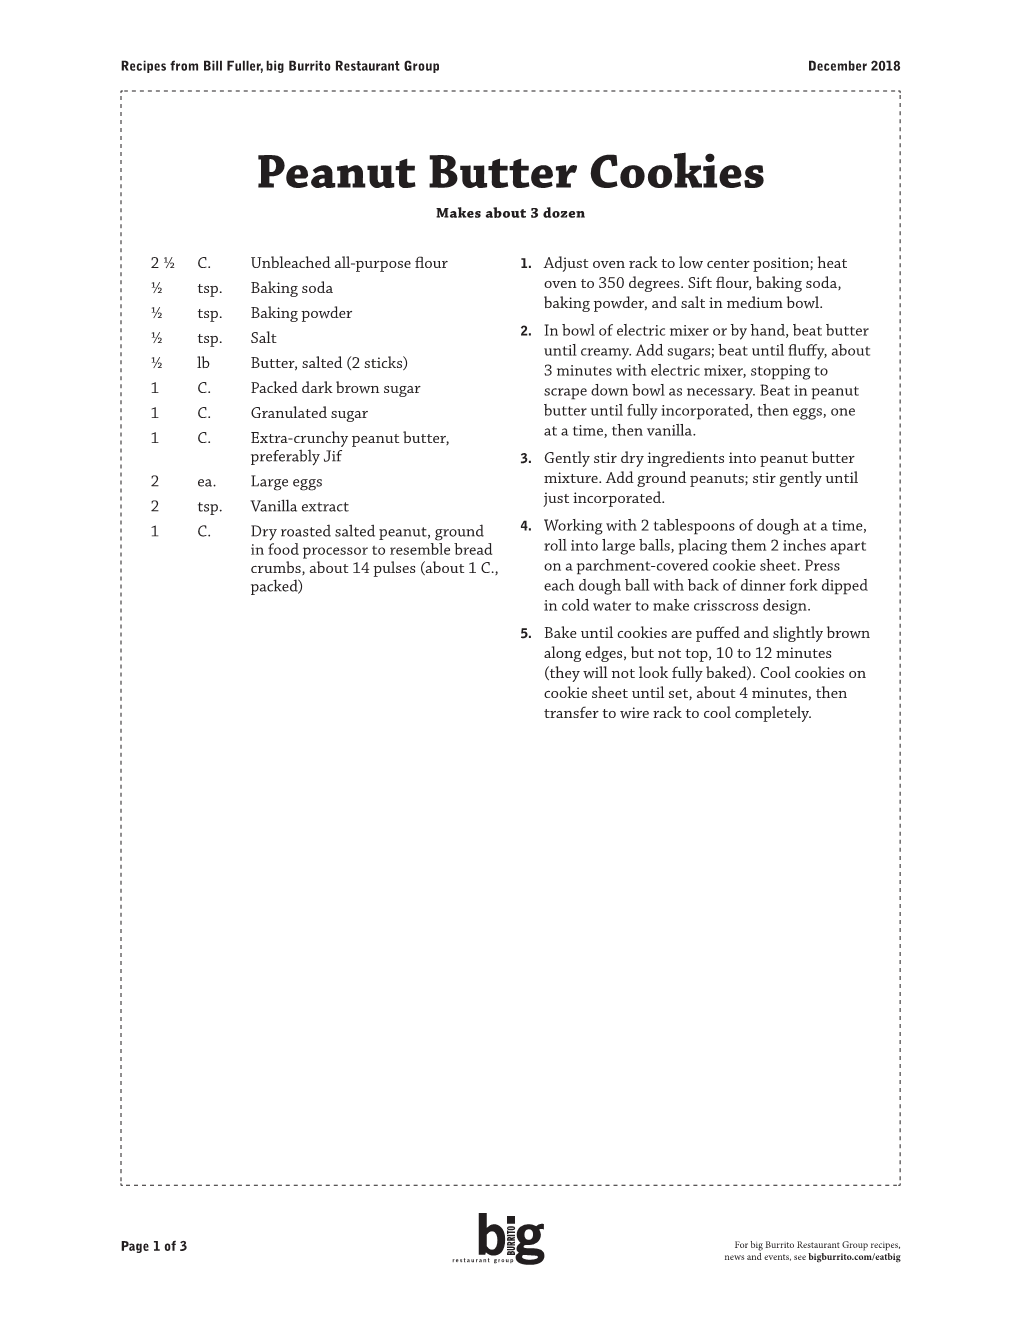 Peanut Butter Cookies Makes About 3 Dozen